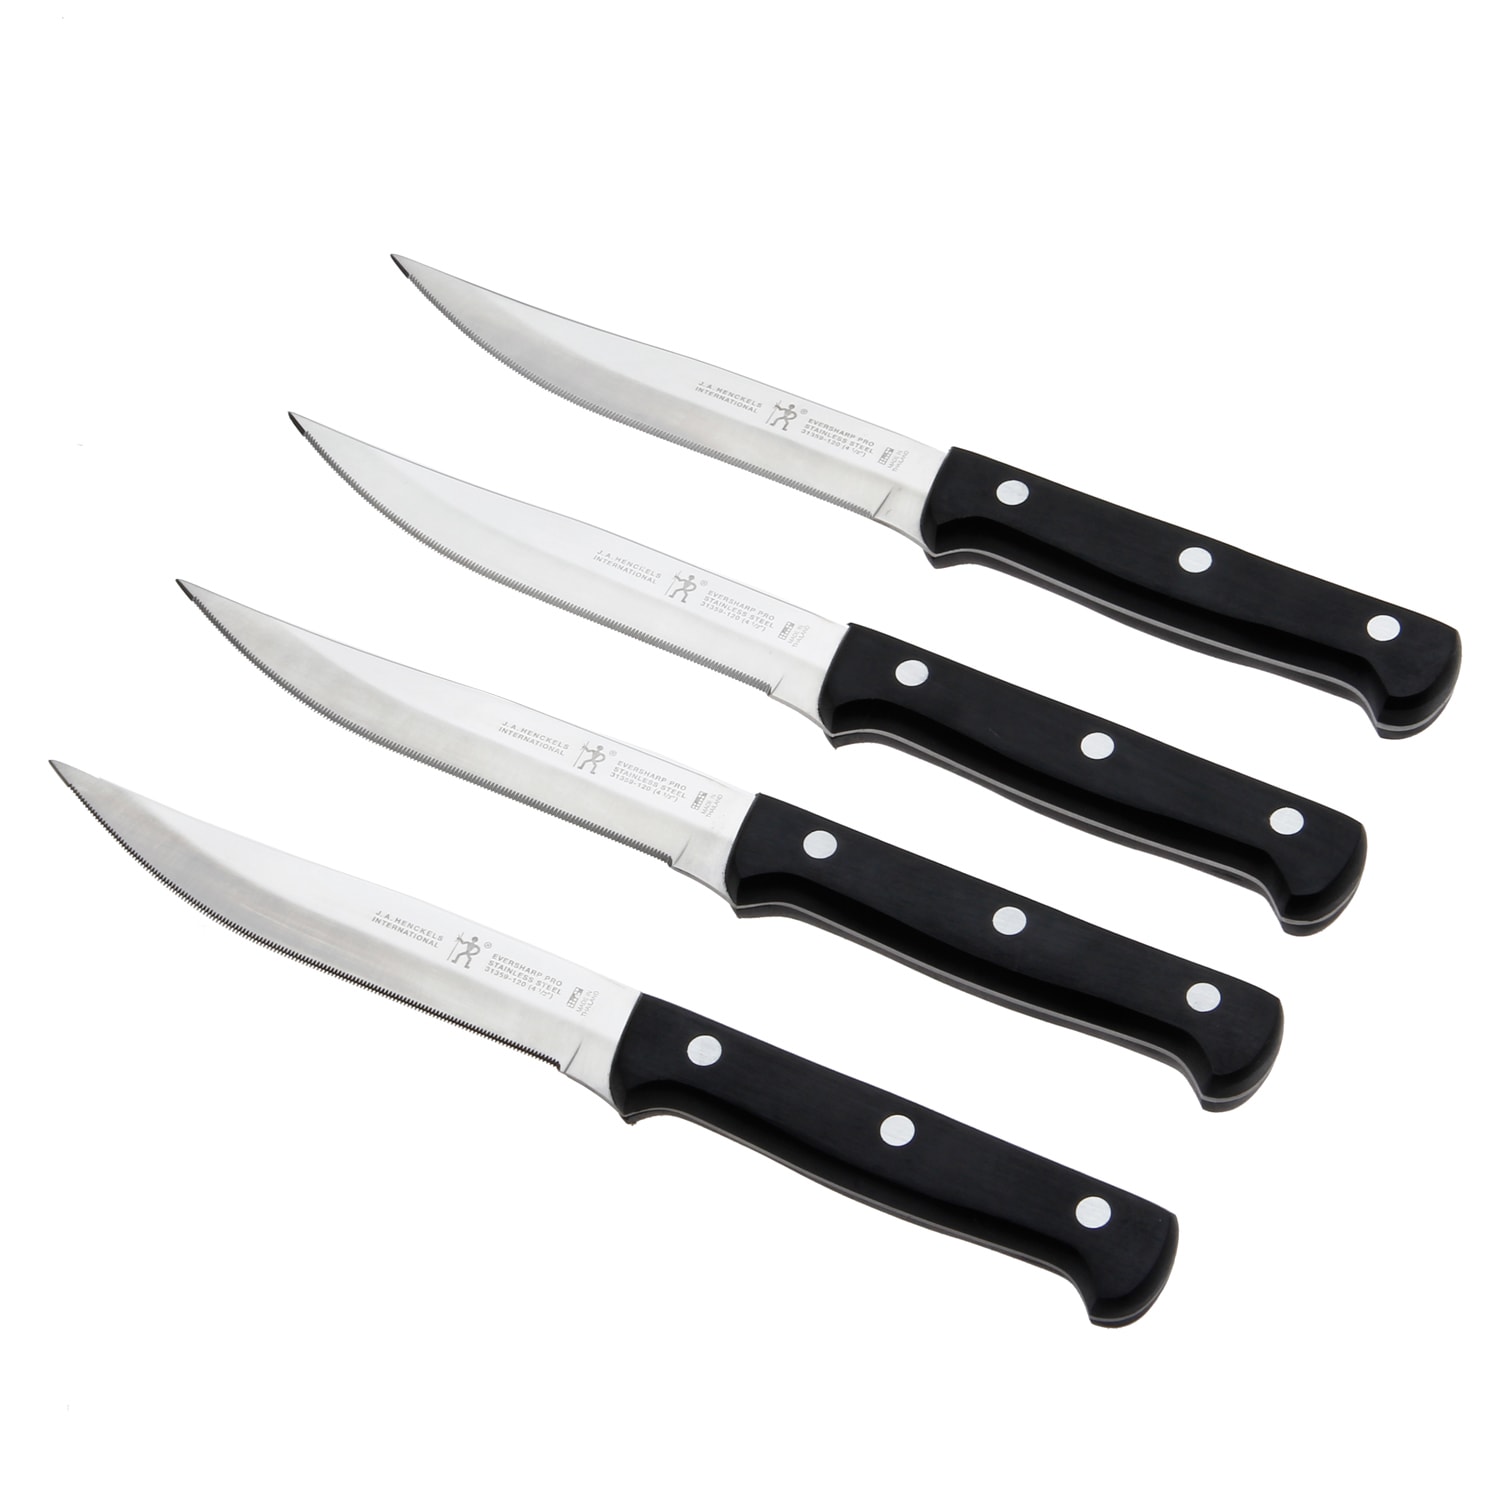 JA Henckels 39350-000 Ever Sharp Pro Stainless Steel Steak Knife Set 4  Piece: Steak Knives (035886089436-3)